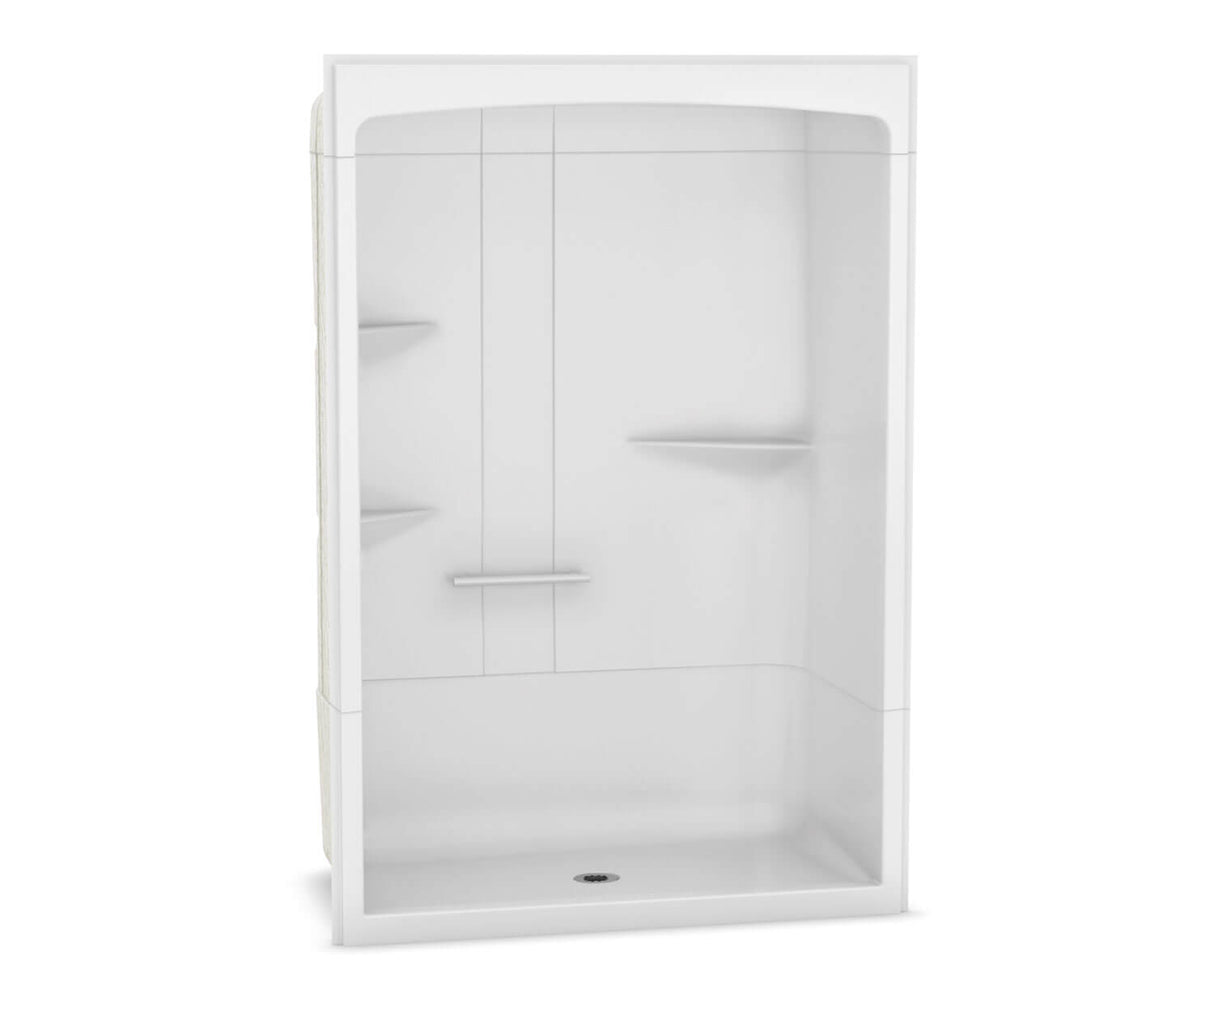 MAAX 105922-SNR-000-001 Camelia SHR-6034 Acrylic Alcove Right-Hand Drain Three-Piece Shower in White